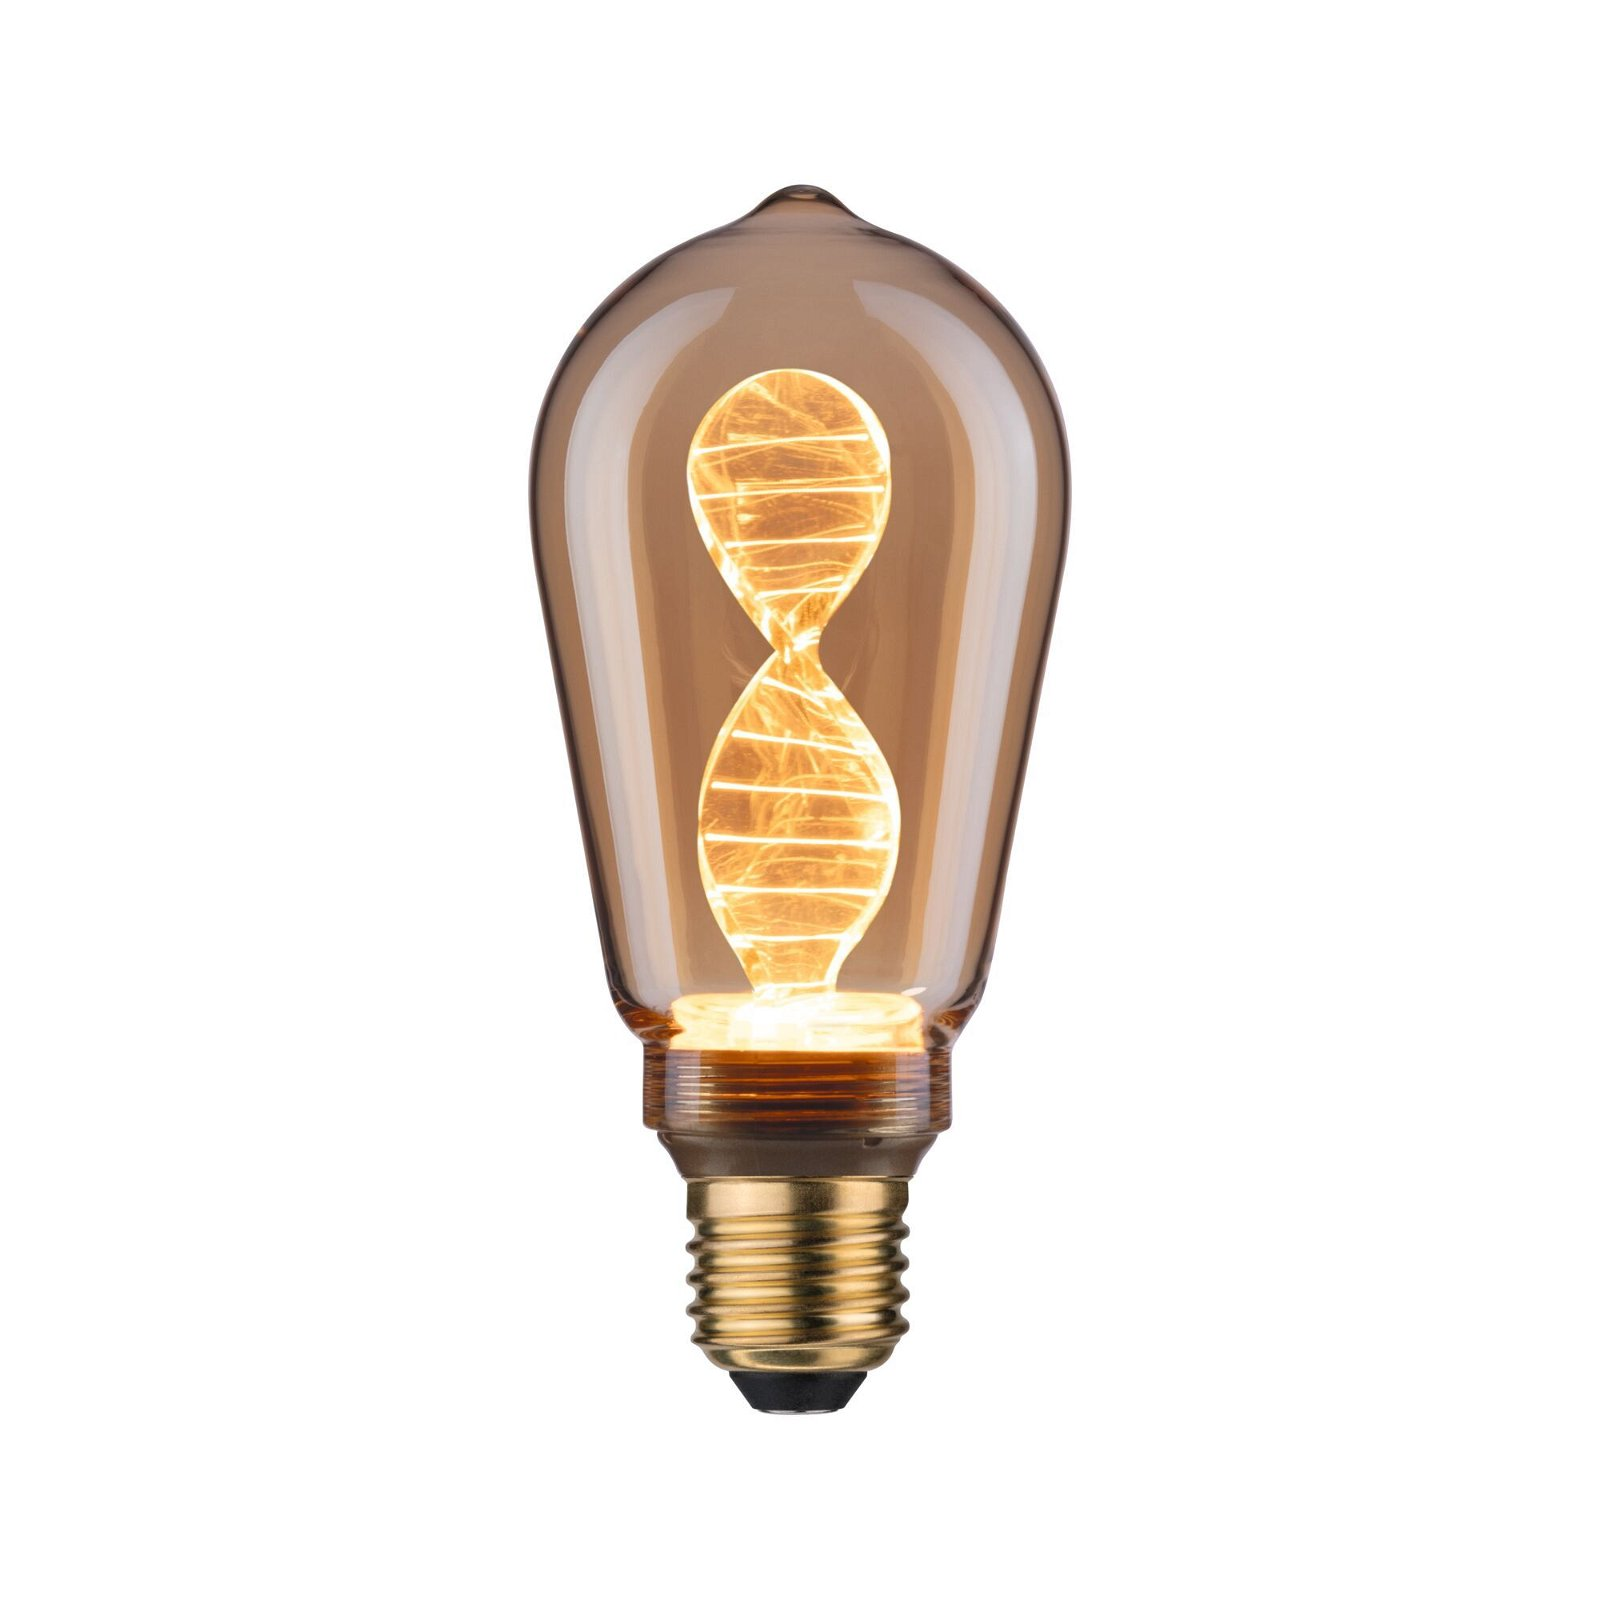 Inner Warmweiß Glow (28885) Edition LICHT PAULMANN Leuchmittel LED